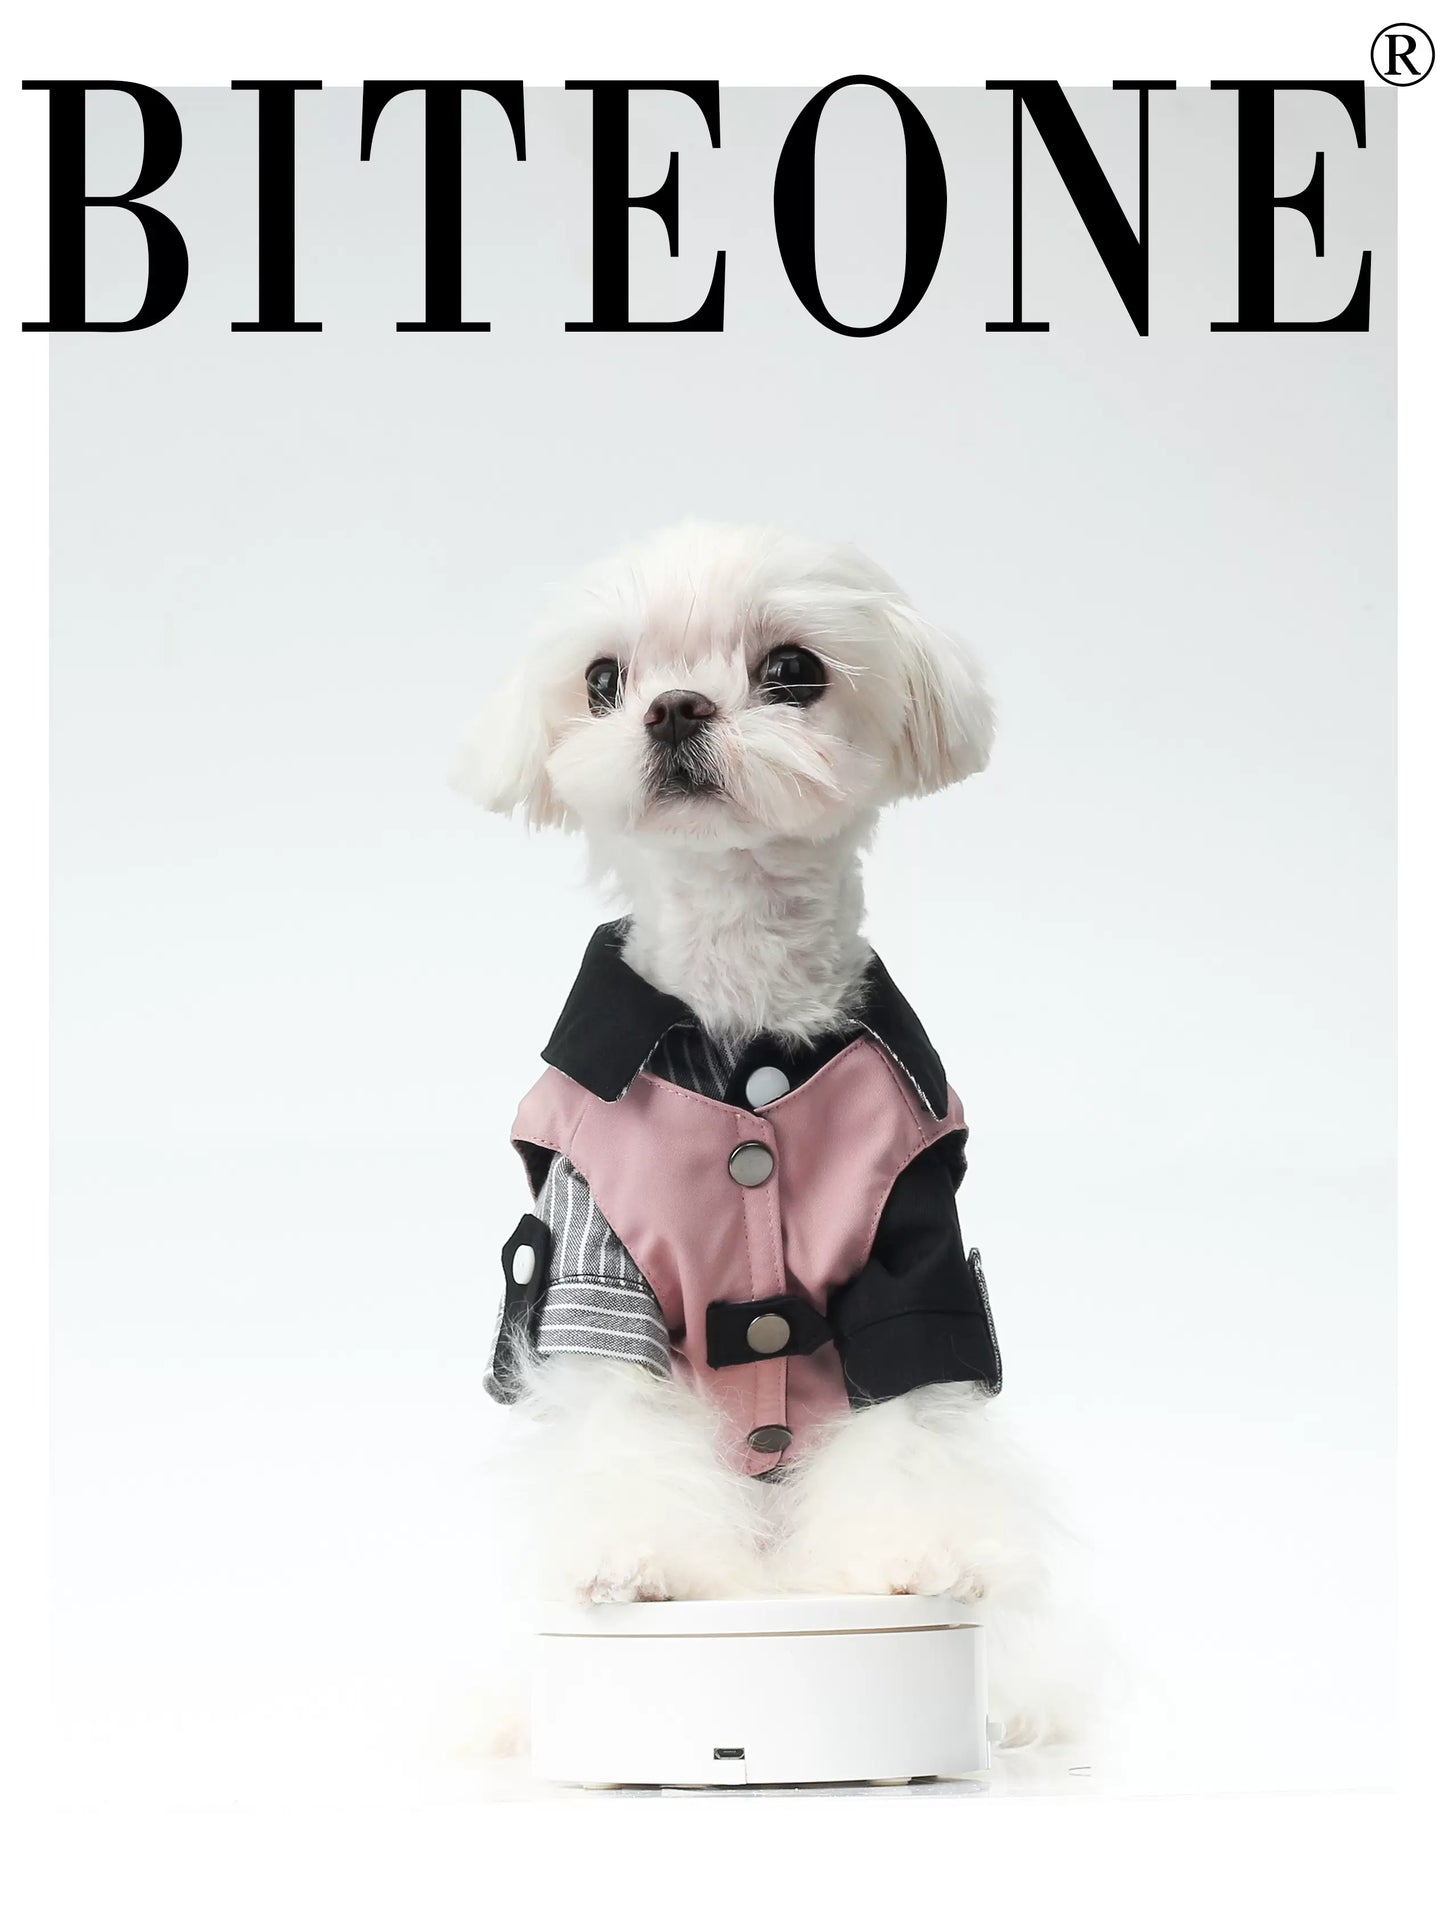 BITEONE Japanese-Inspired Pet Workwear: Fall/Winter Shirt + Vest Combo